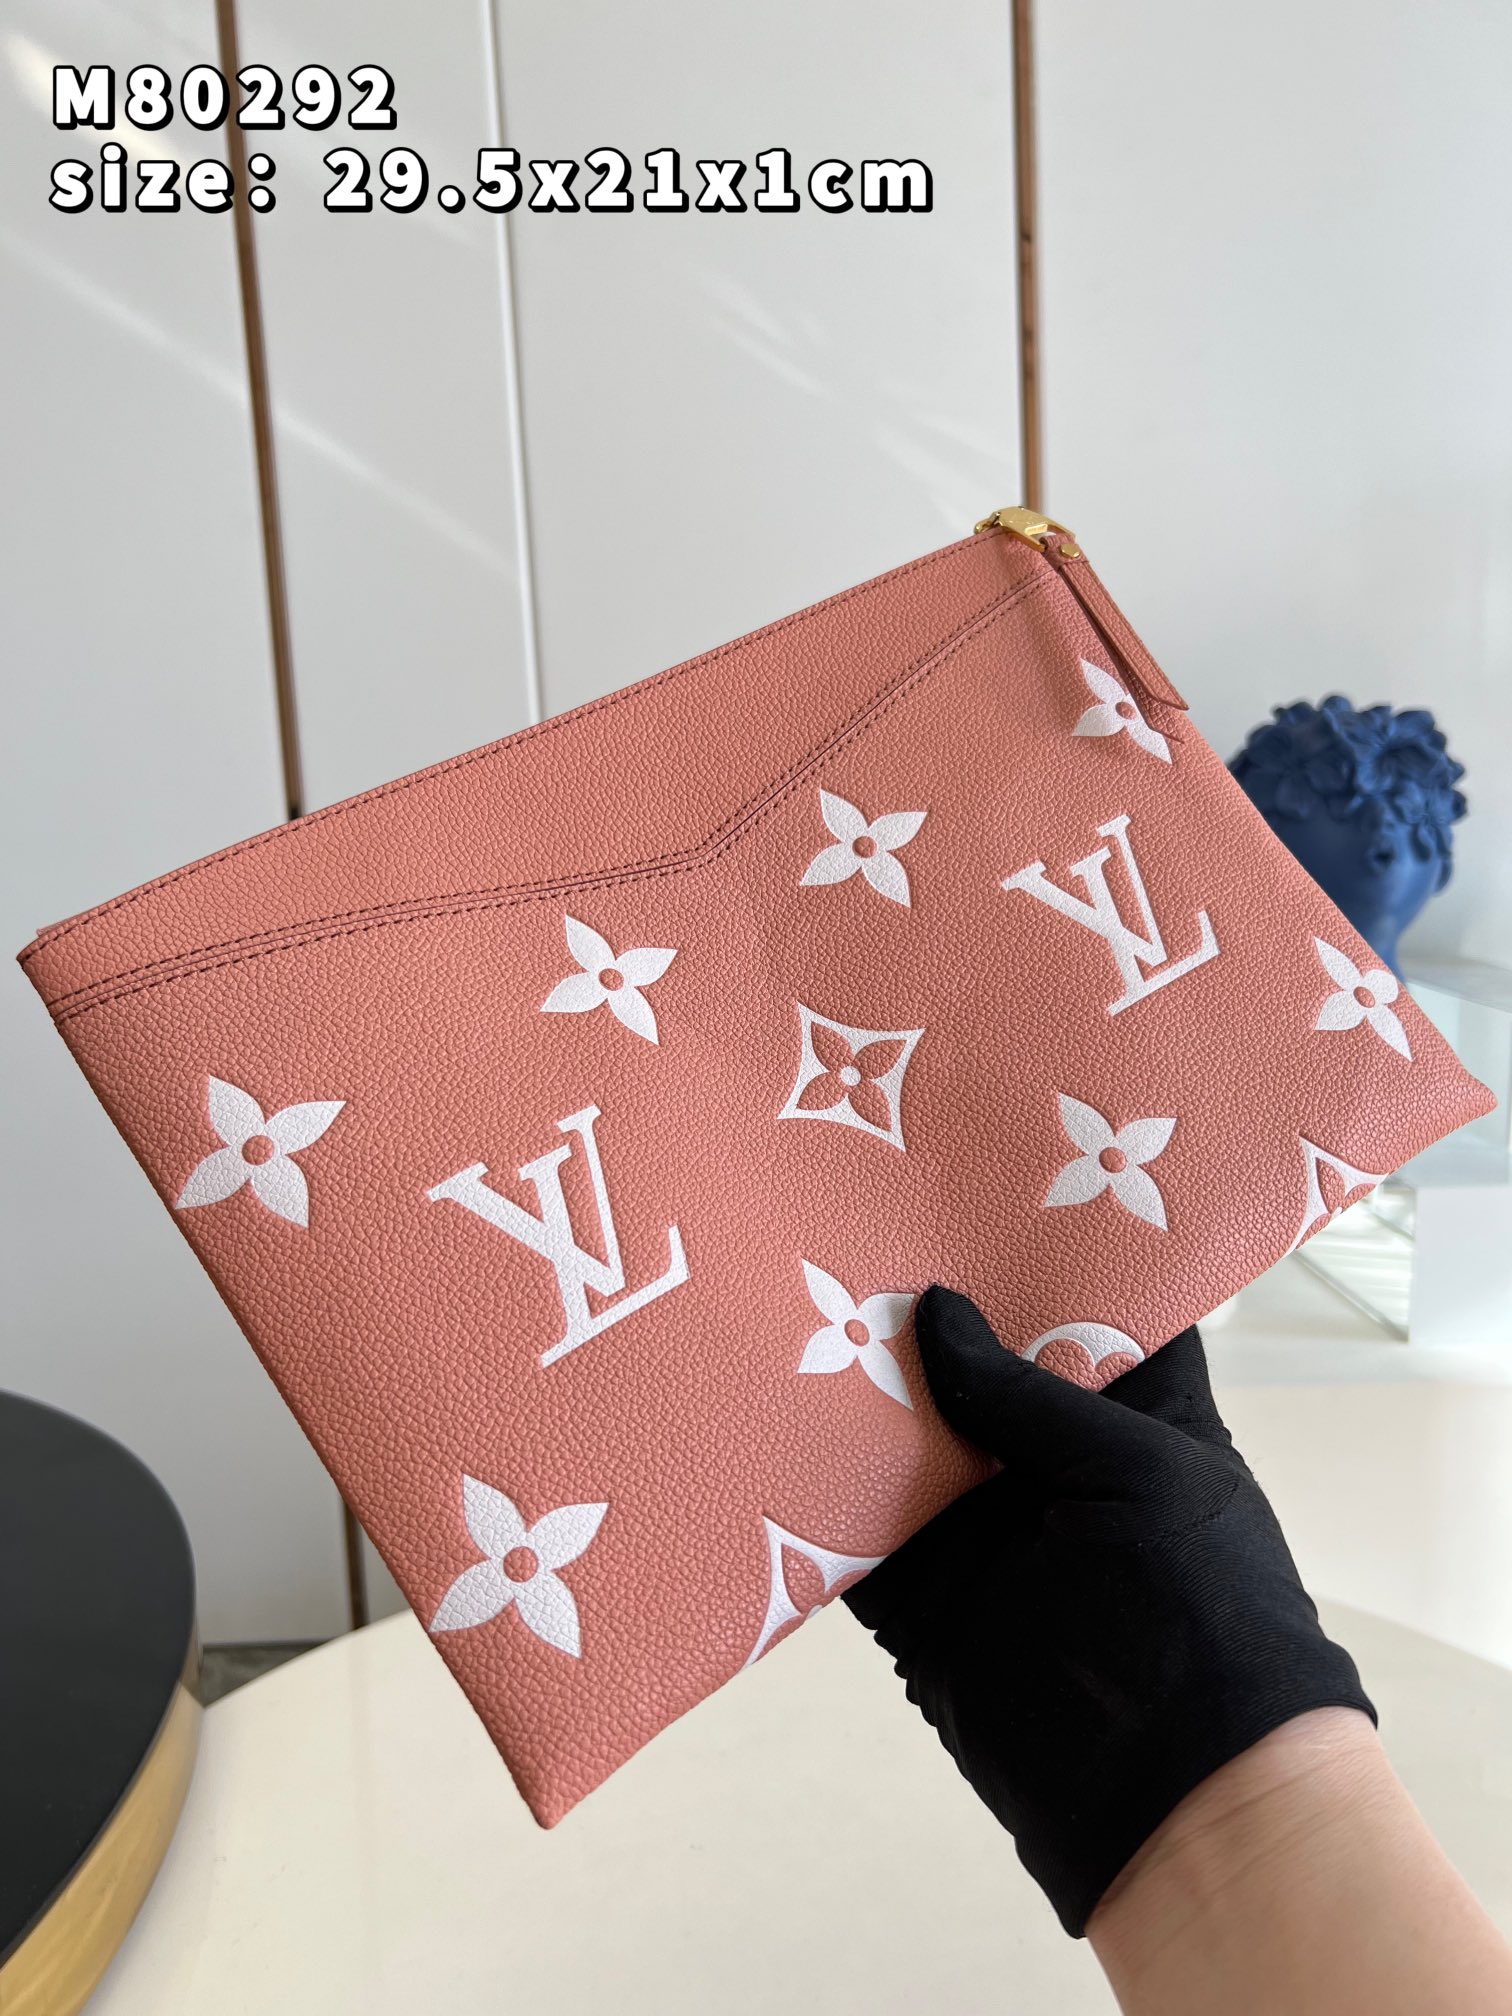 Louis Vuitton Monogram Empreinte Monogram Empreinte Embossed Supple Grained Cowhide Leather Pink M80292